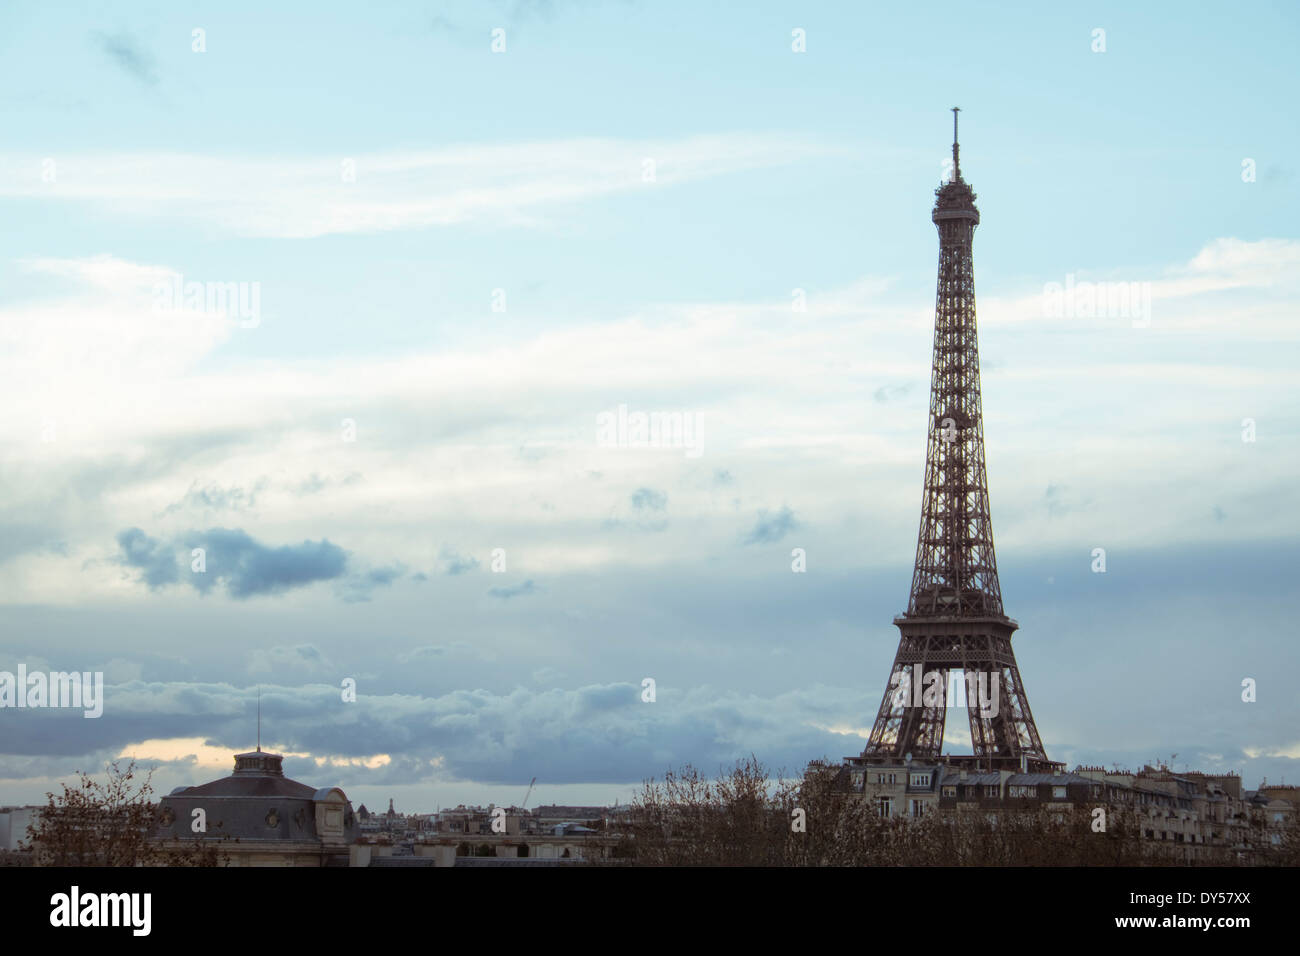 The Eiffel Tower, Paris, France, as seen through a window. Stock Photo